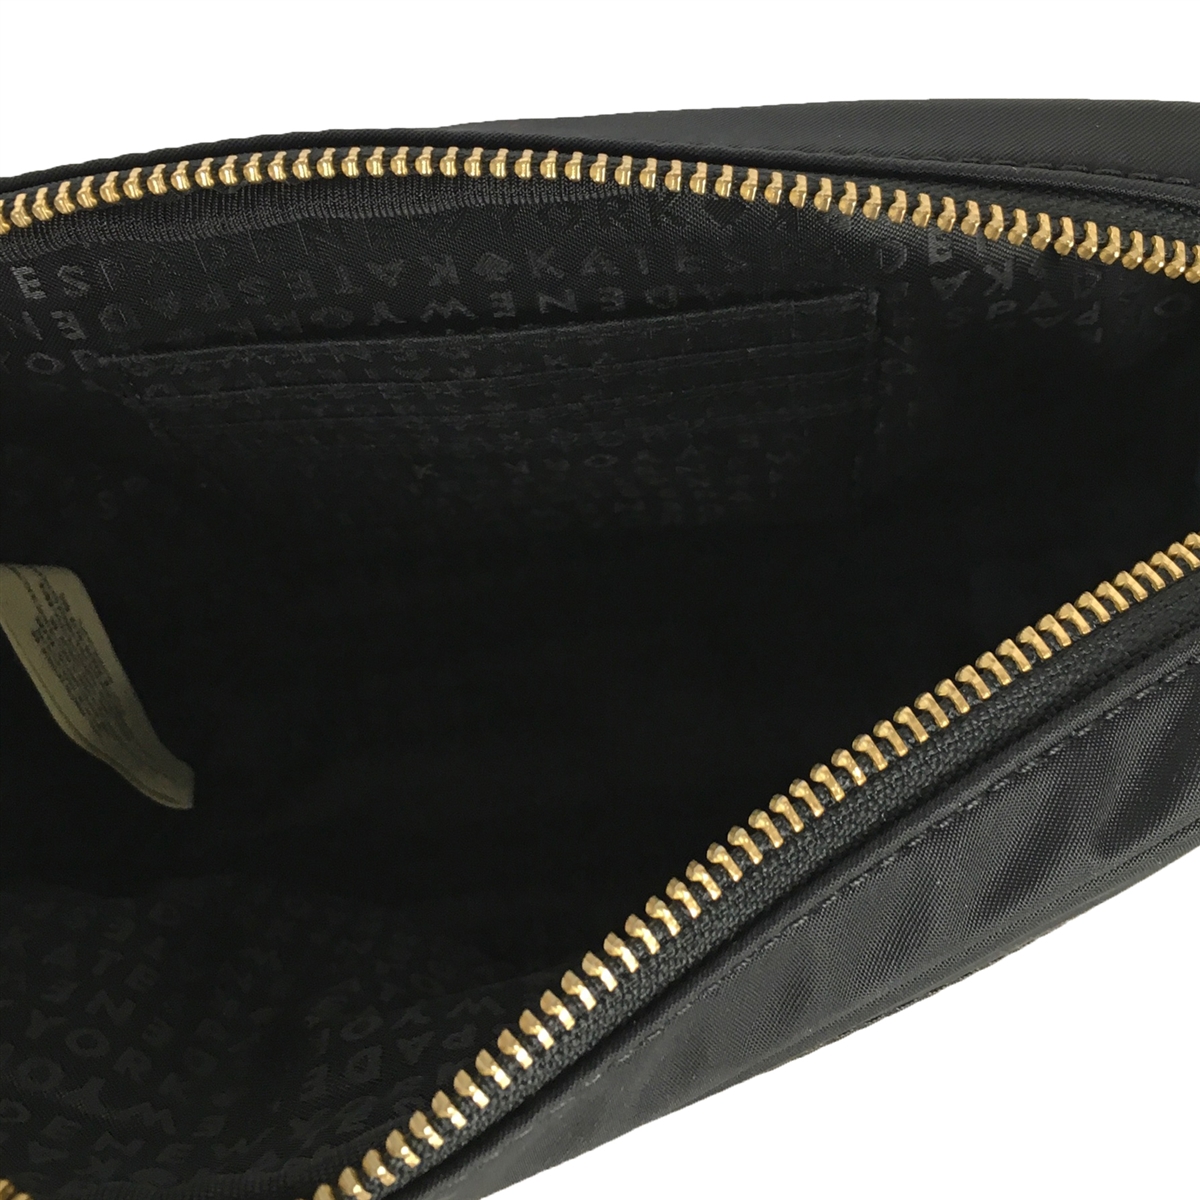 Kate Spade Sophy Nylon Waist Pack Belt Bag, Black